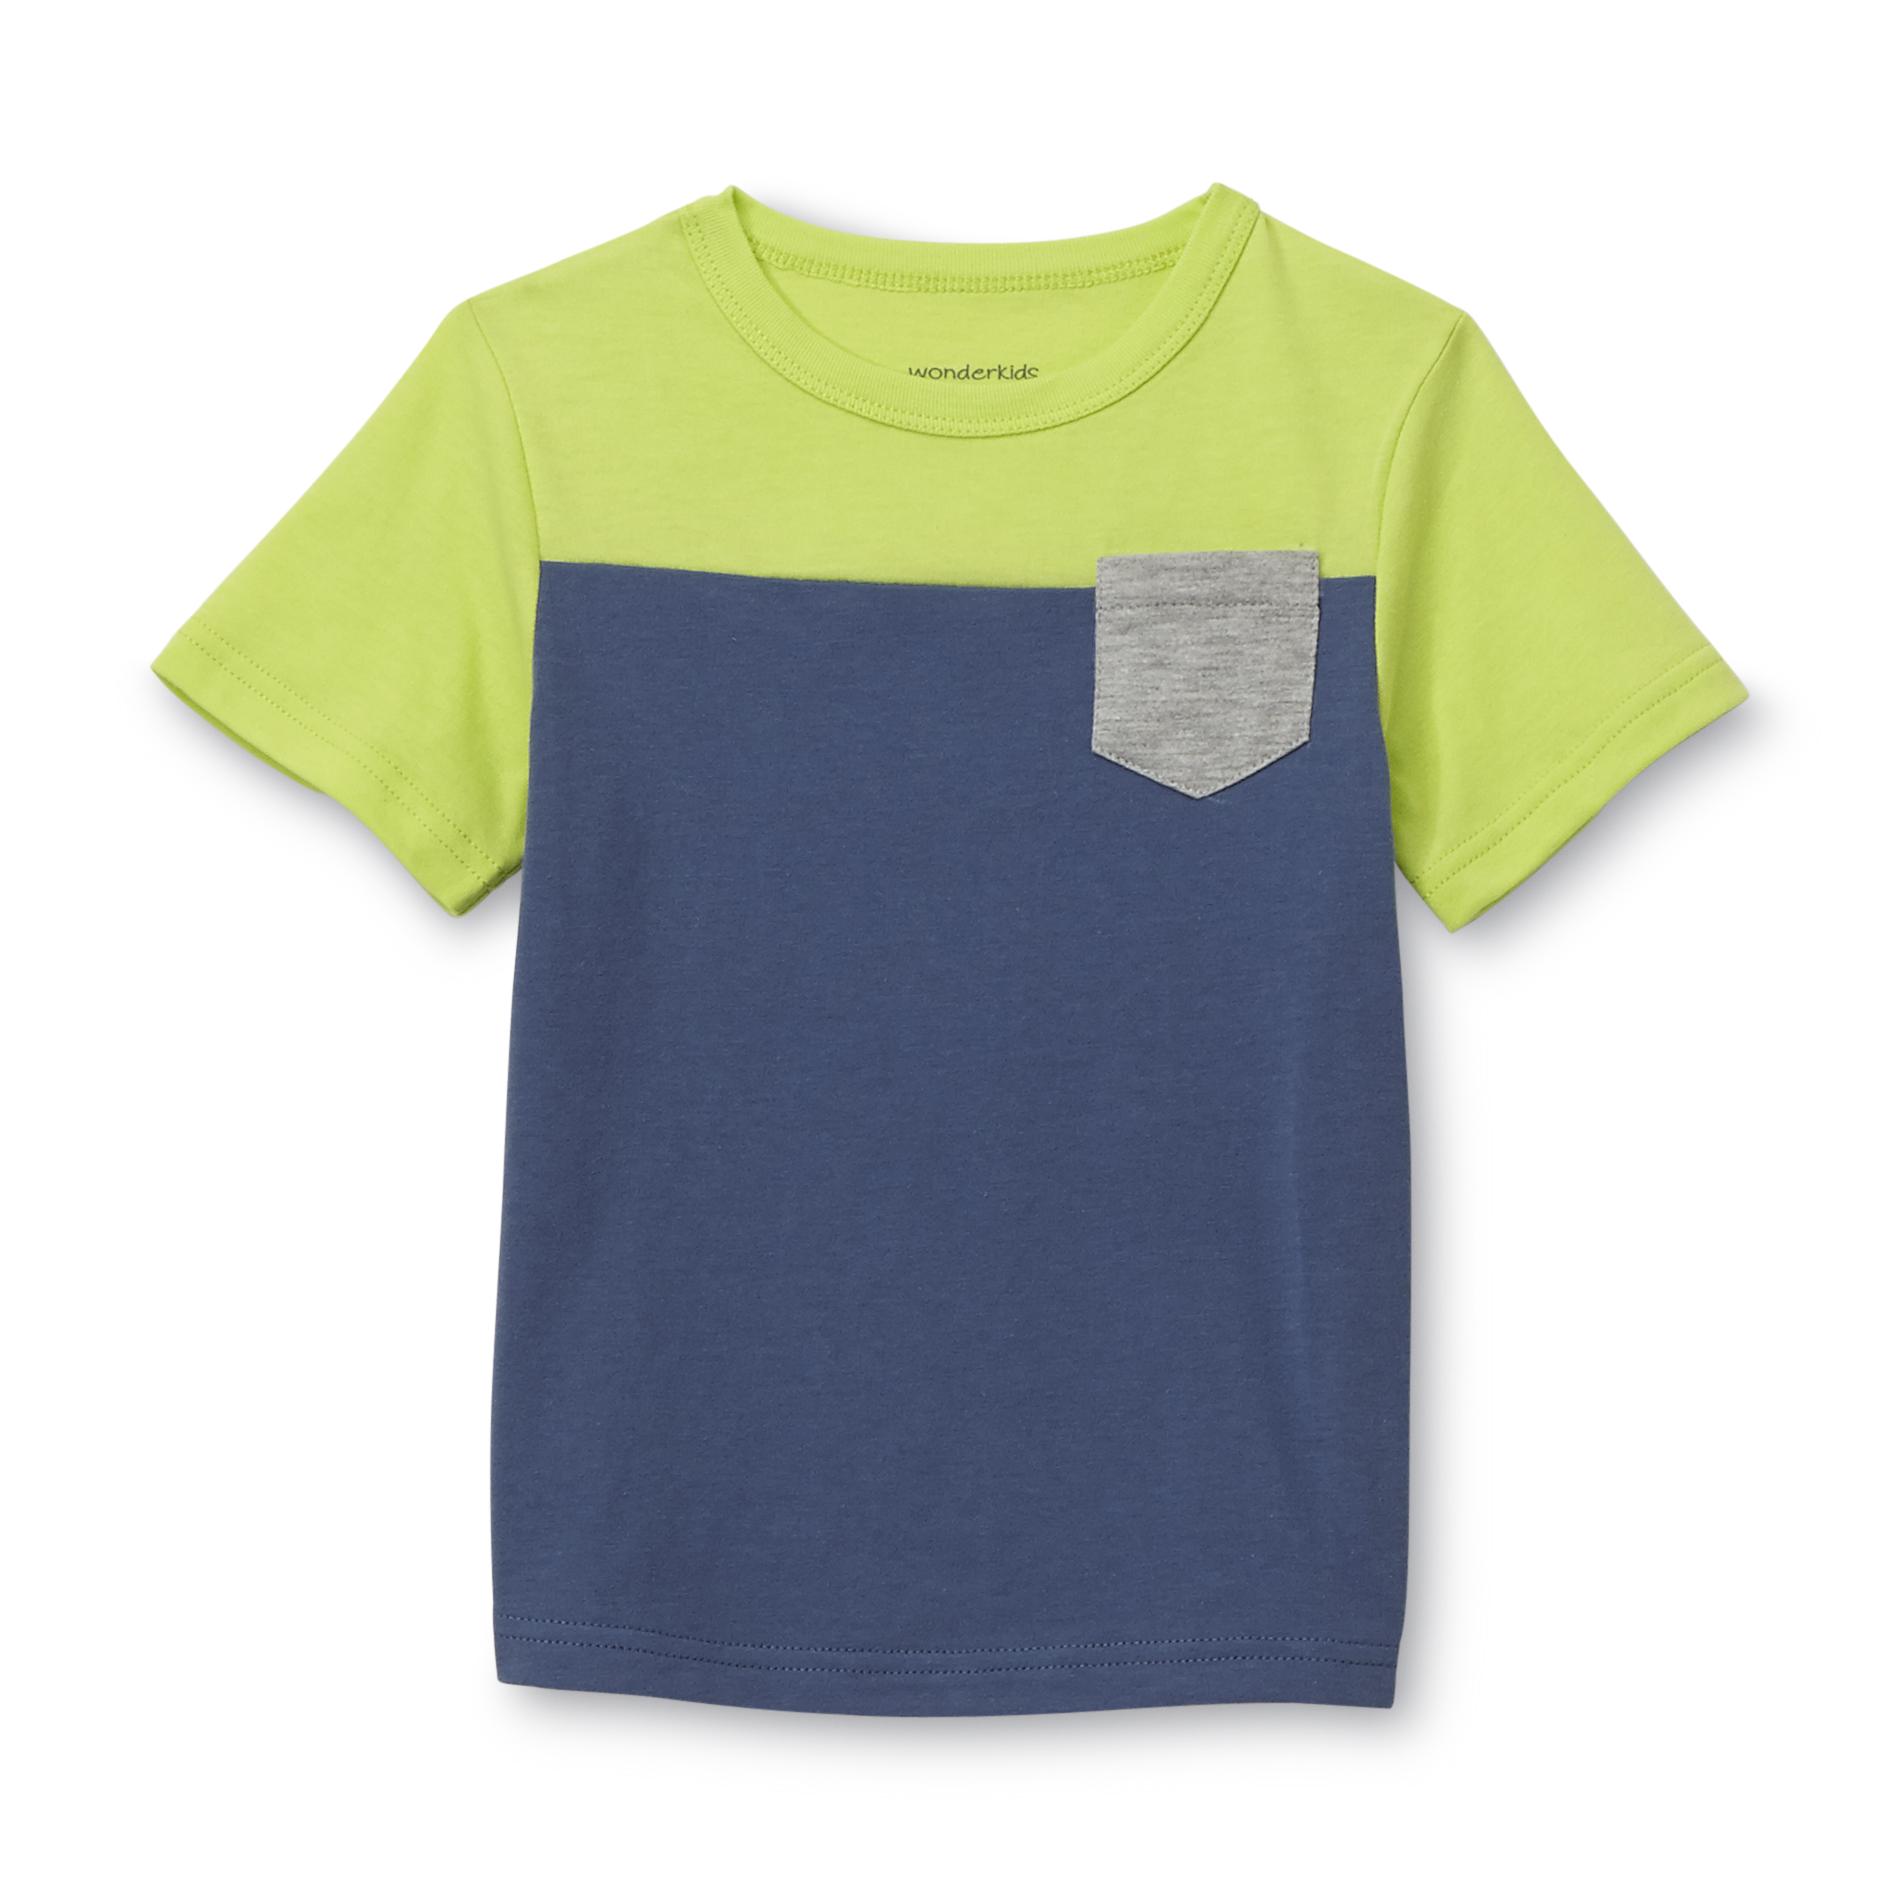 WonderKids Infant & Toddler Boy's Crew Neck T-Shirt - Colorblock